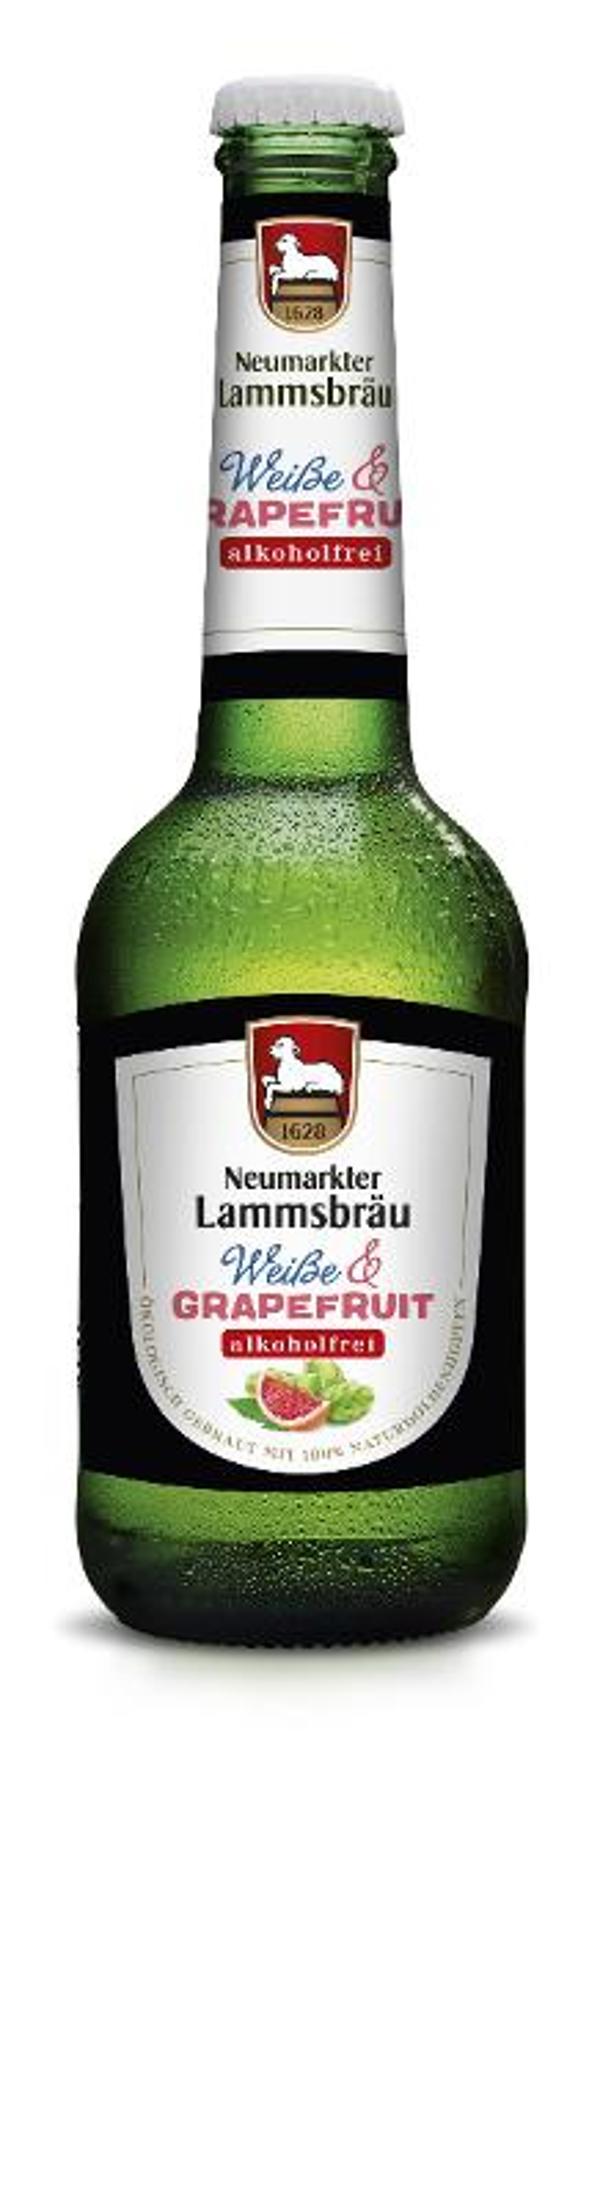 Produktfoto zu Lammsbräu Weiße Grapefruit allkoholfrei